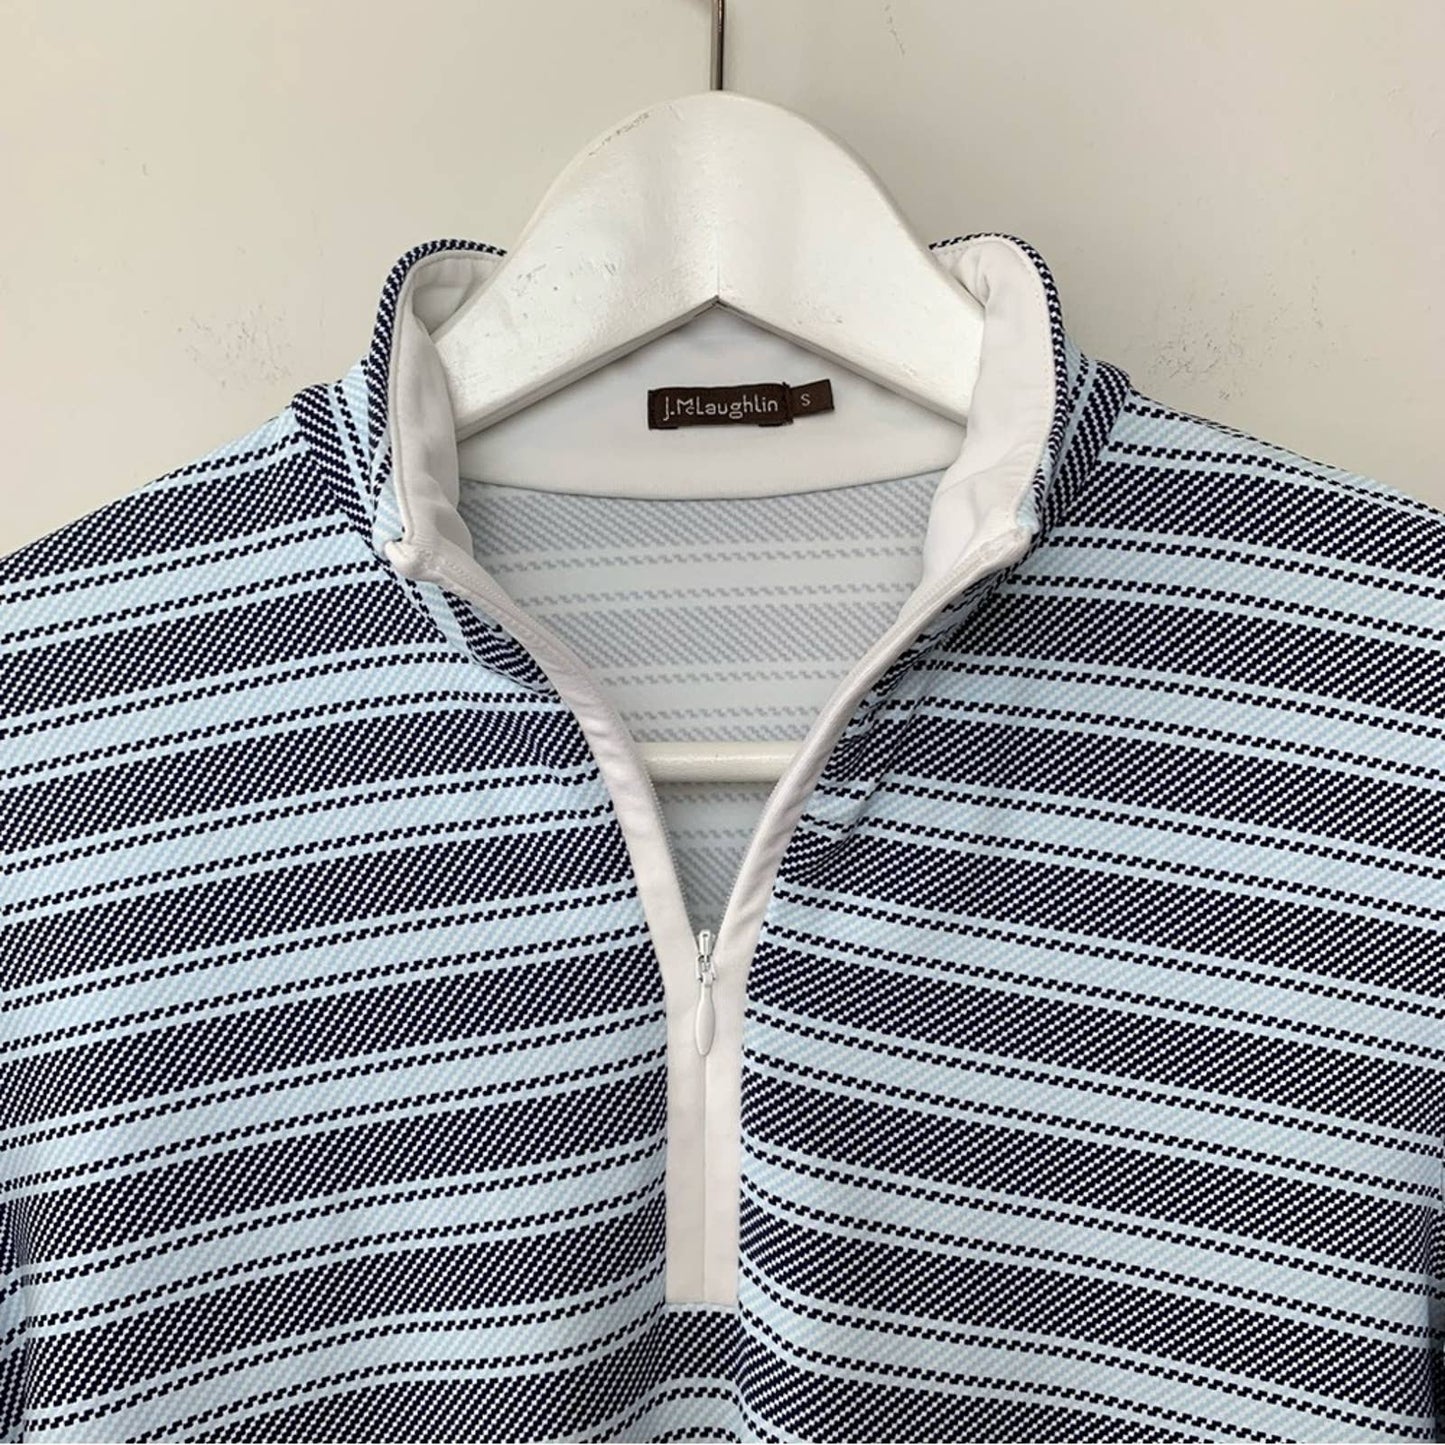 J. McLaughlin Bedford Quarter Zip Striped Top Long Sleeve Pullover Catalina S